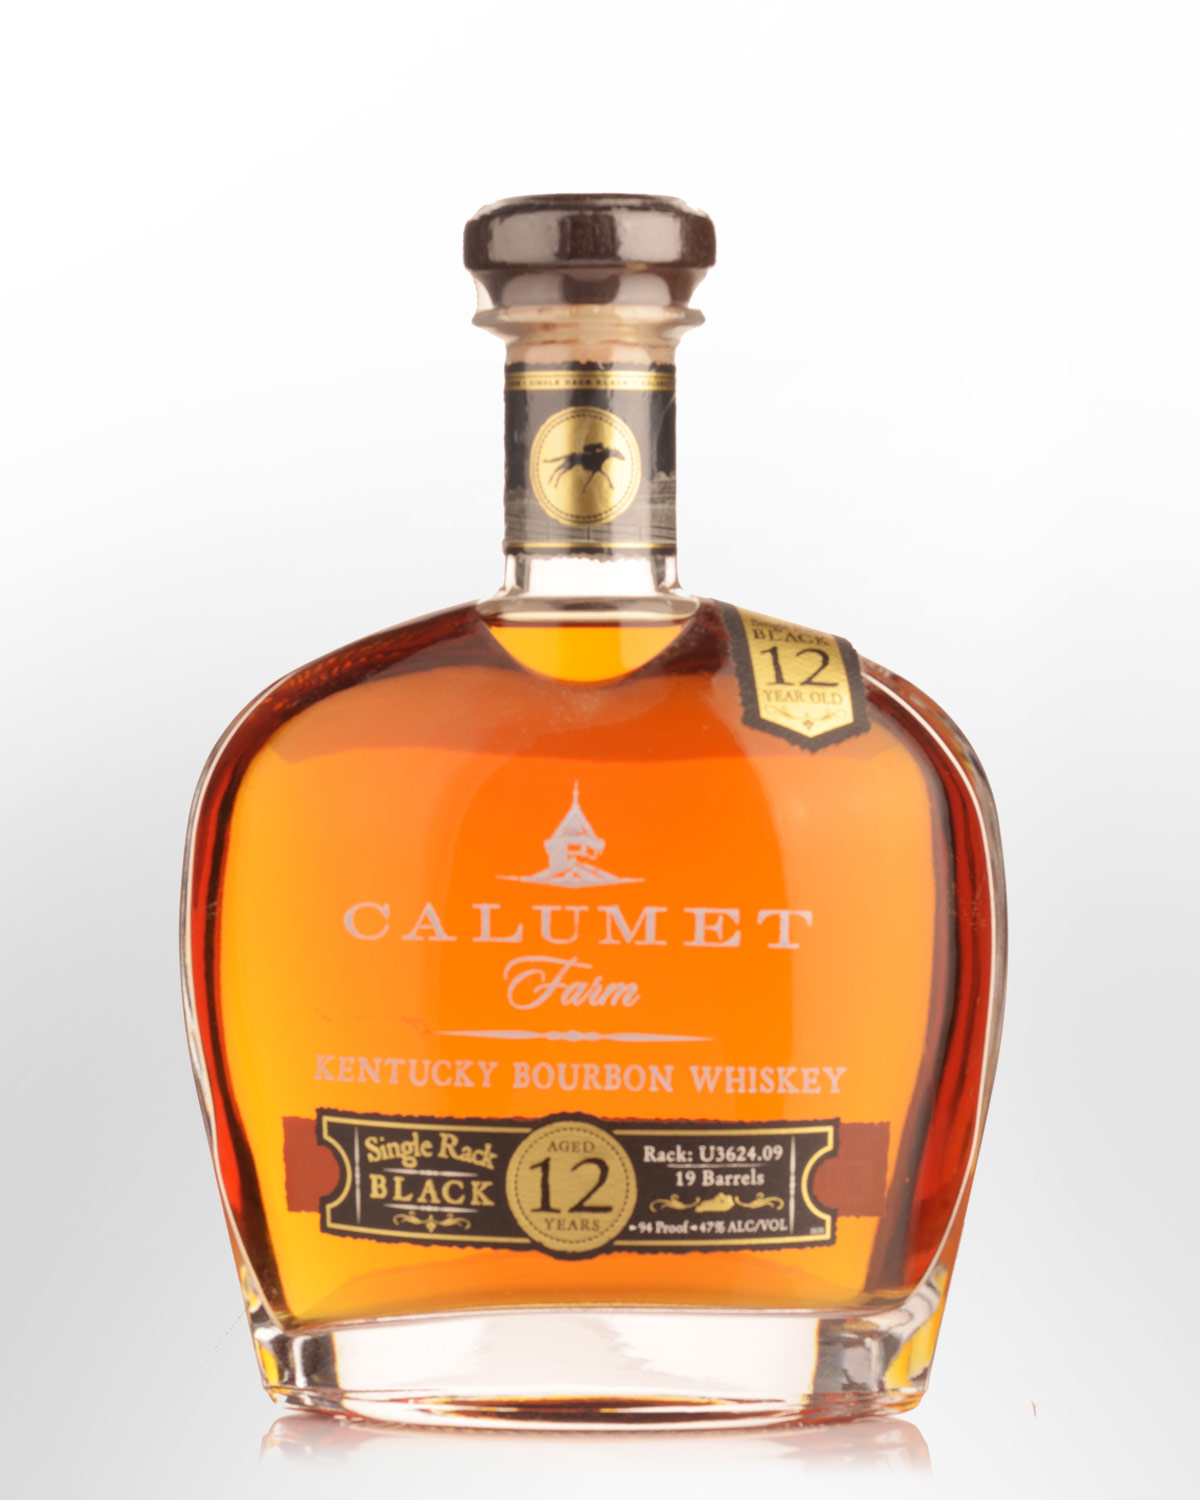 Calumet Farm Single Rack Black 12 Year Old Kentucky Bourbon Whiskey ...